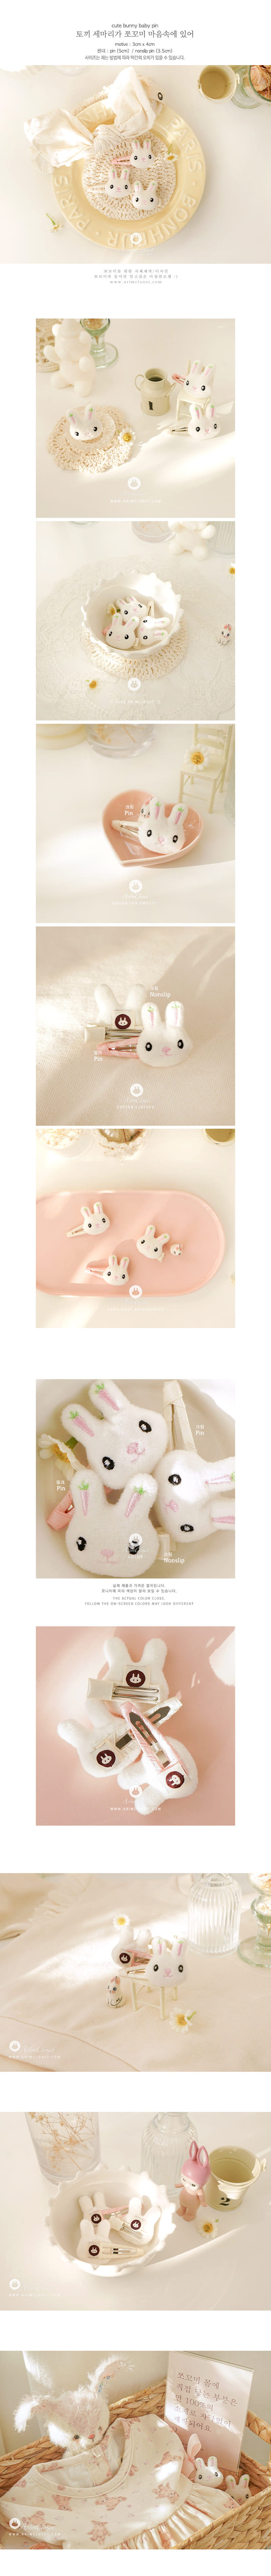 Arim Closet - Korean Baby Fashion - #babyclothing - Cute Bunny Baby Pin